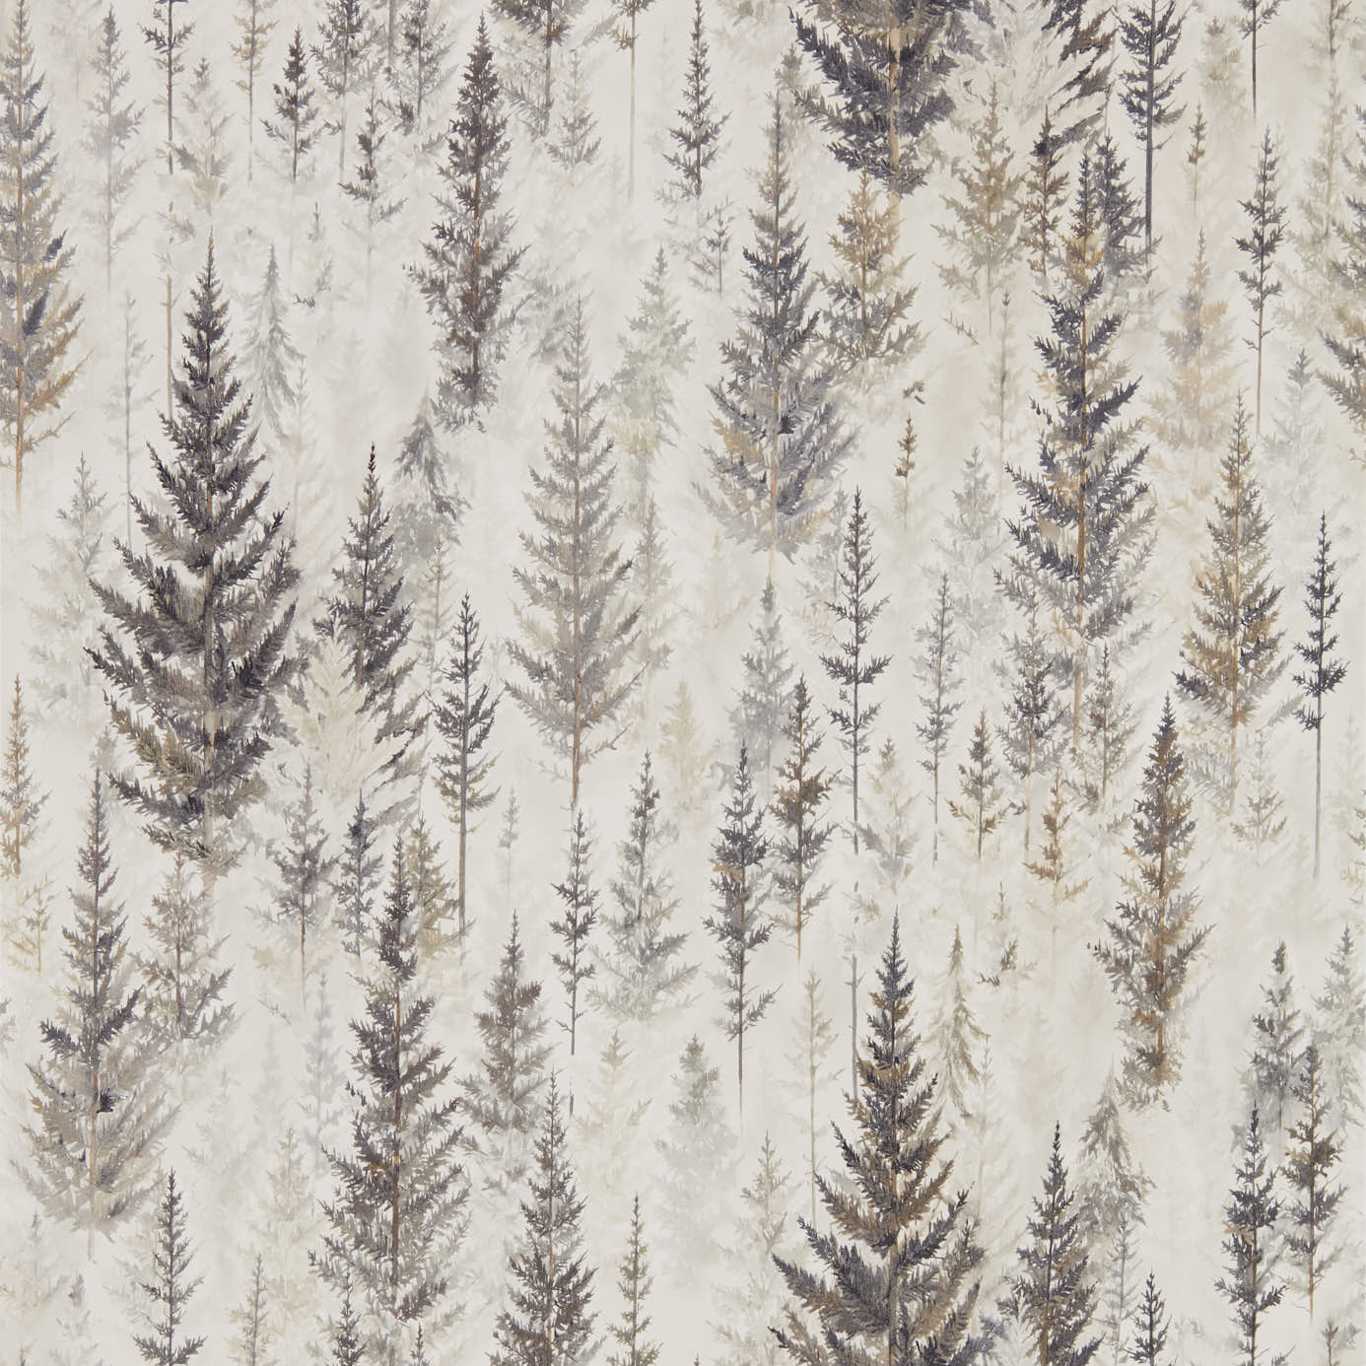 Juniper Pine Elder Bark Wallpaper by SAN